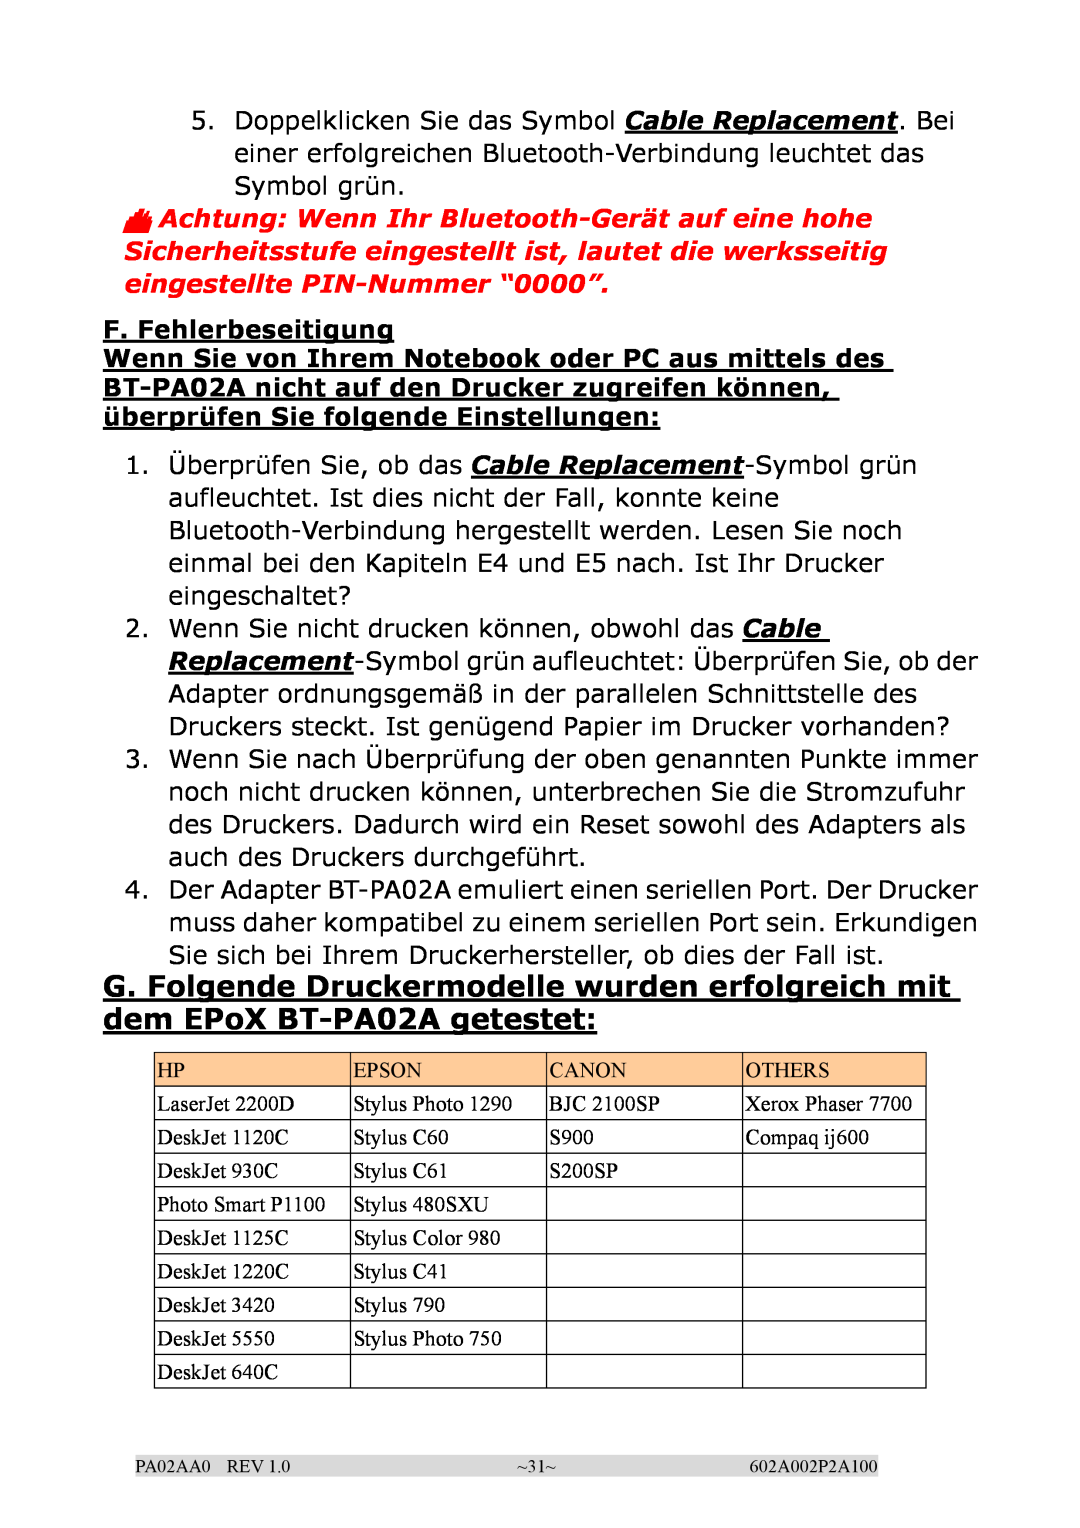 EPoX Computer BT-PA02A manual F. Fehlerbeseitigung 